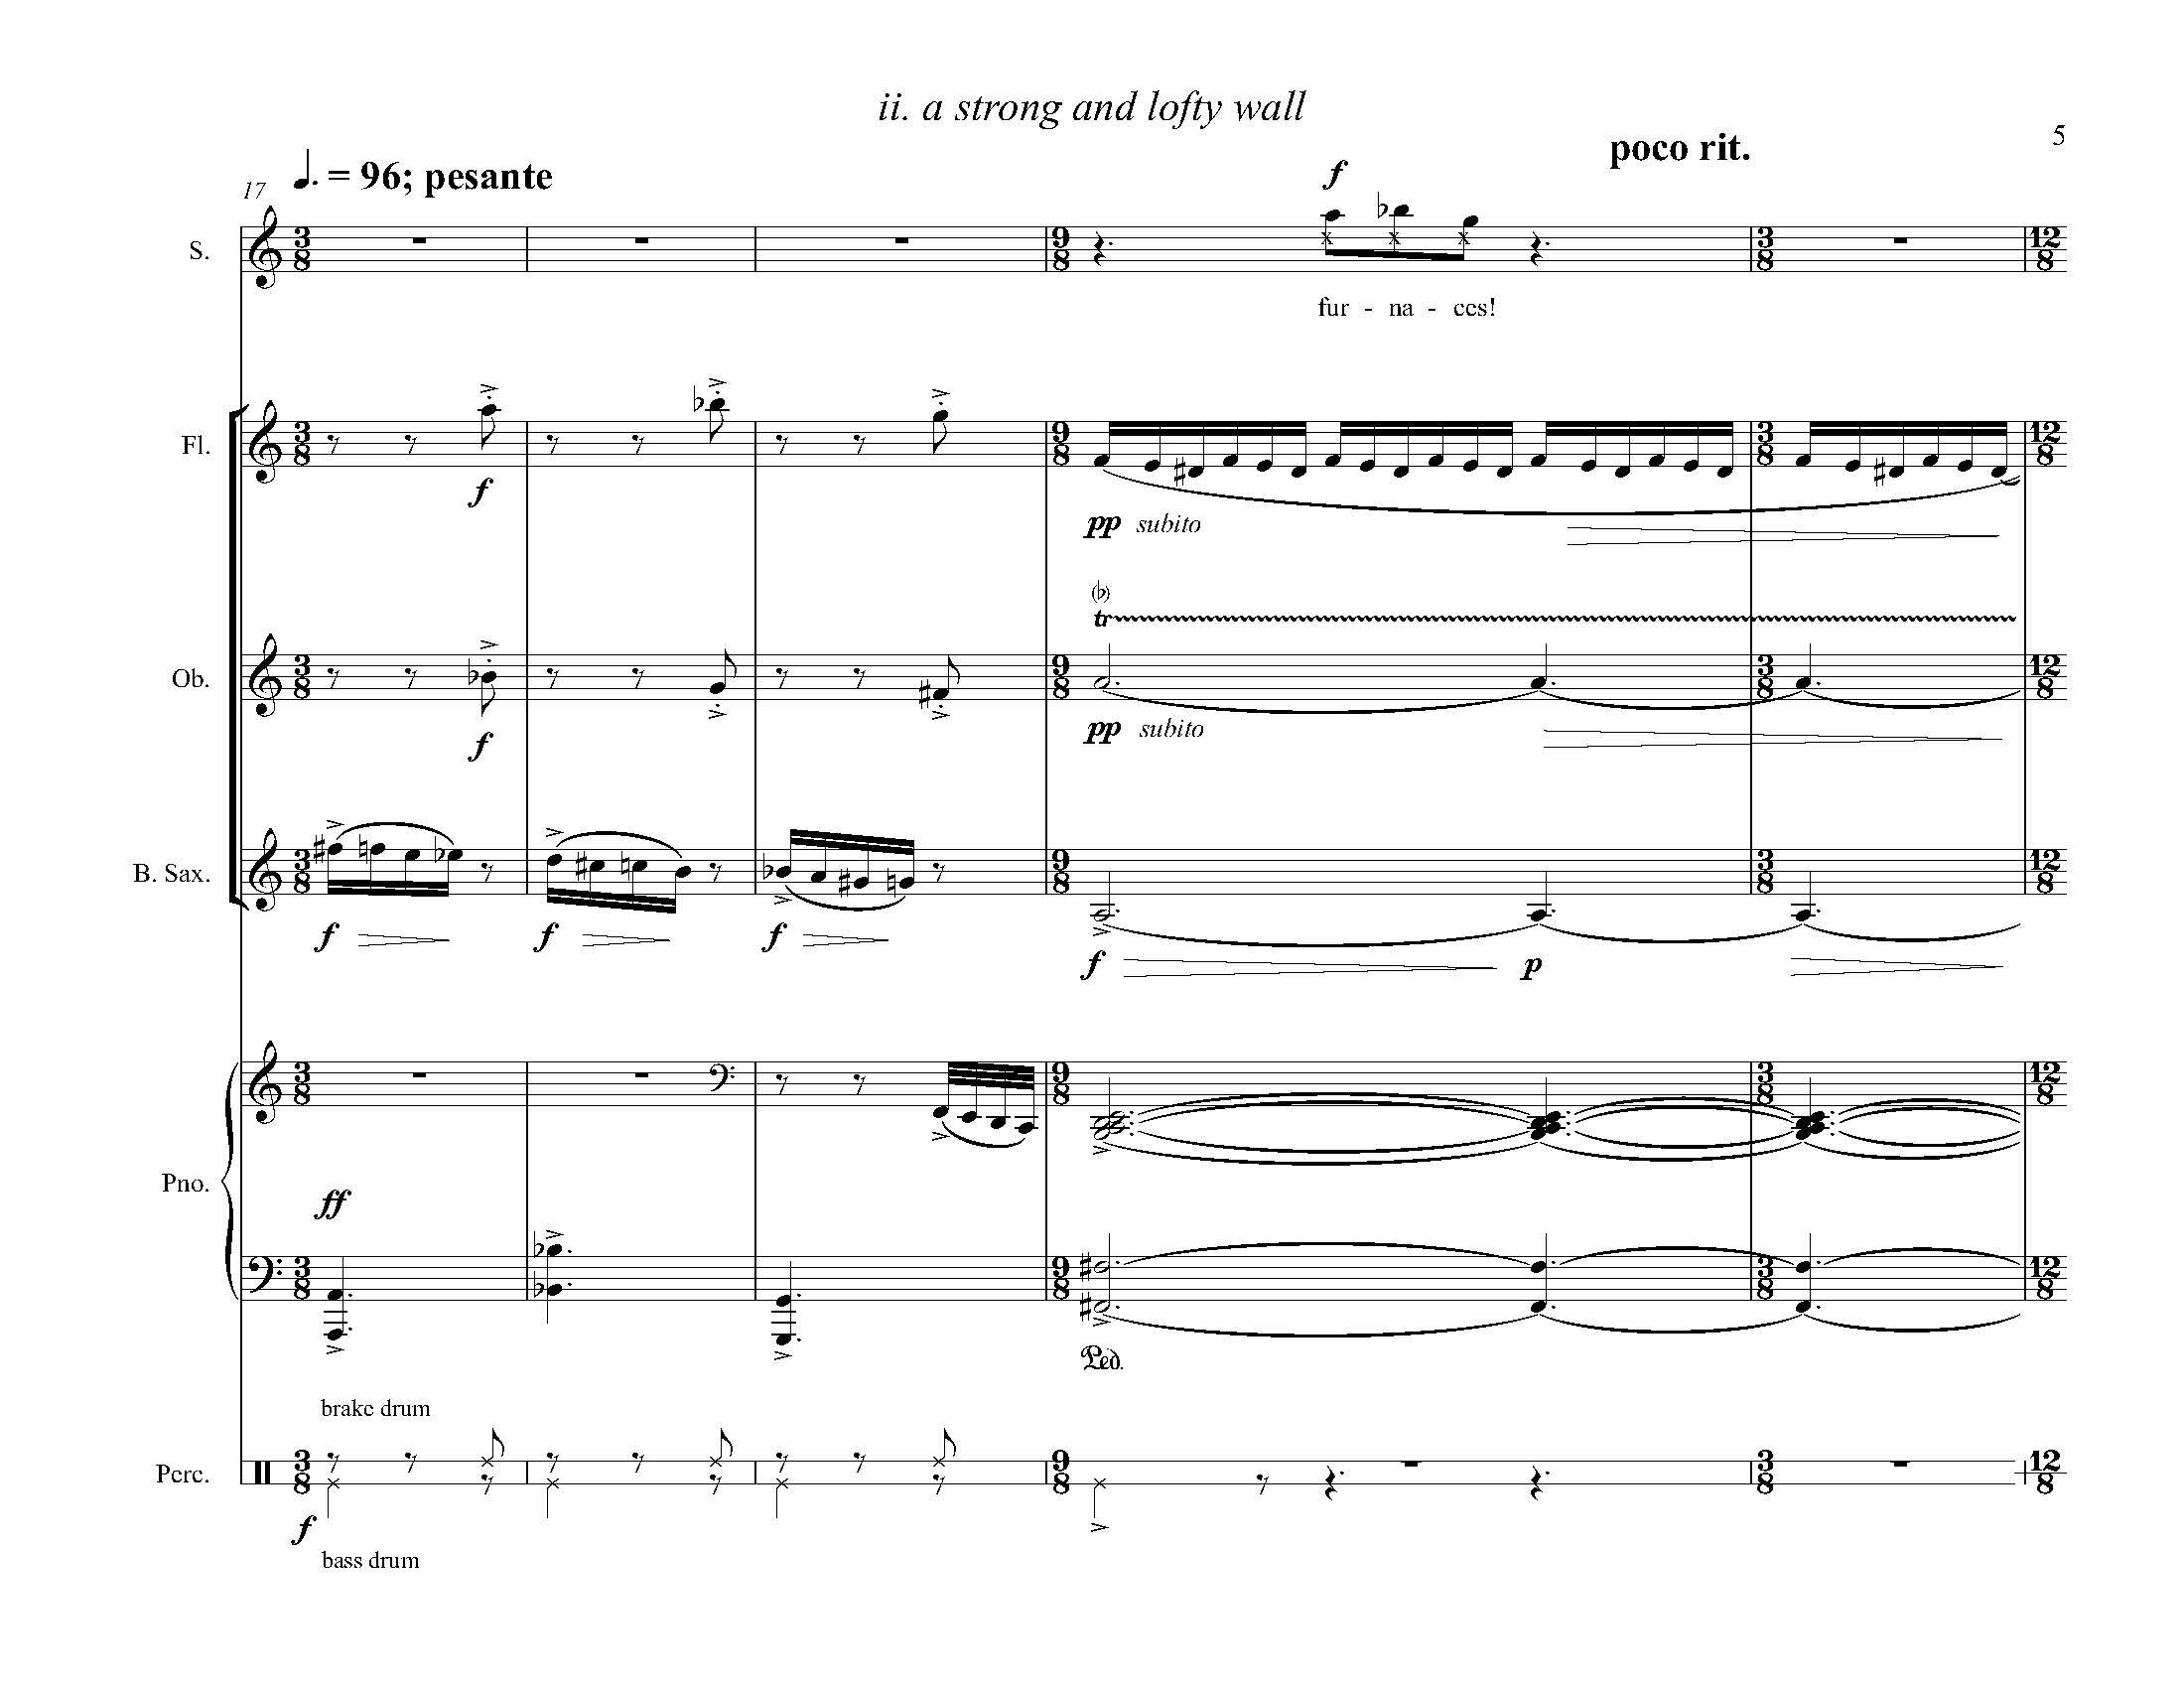 Prince Prospero - Complete Score_Page_11.jpg